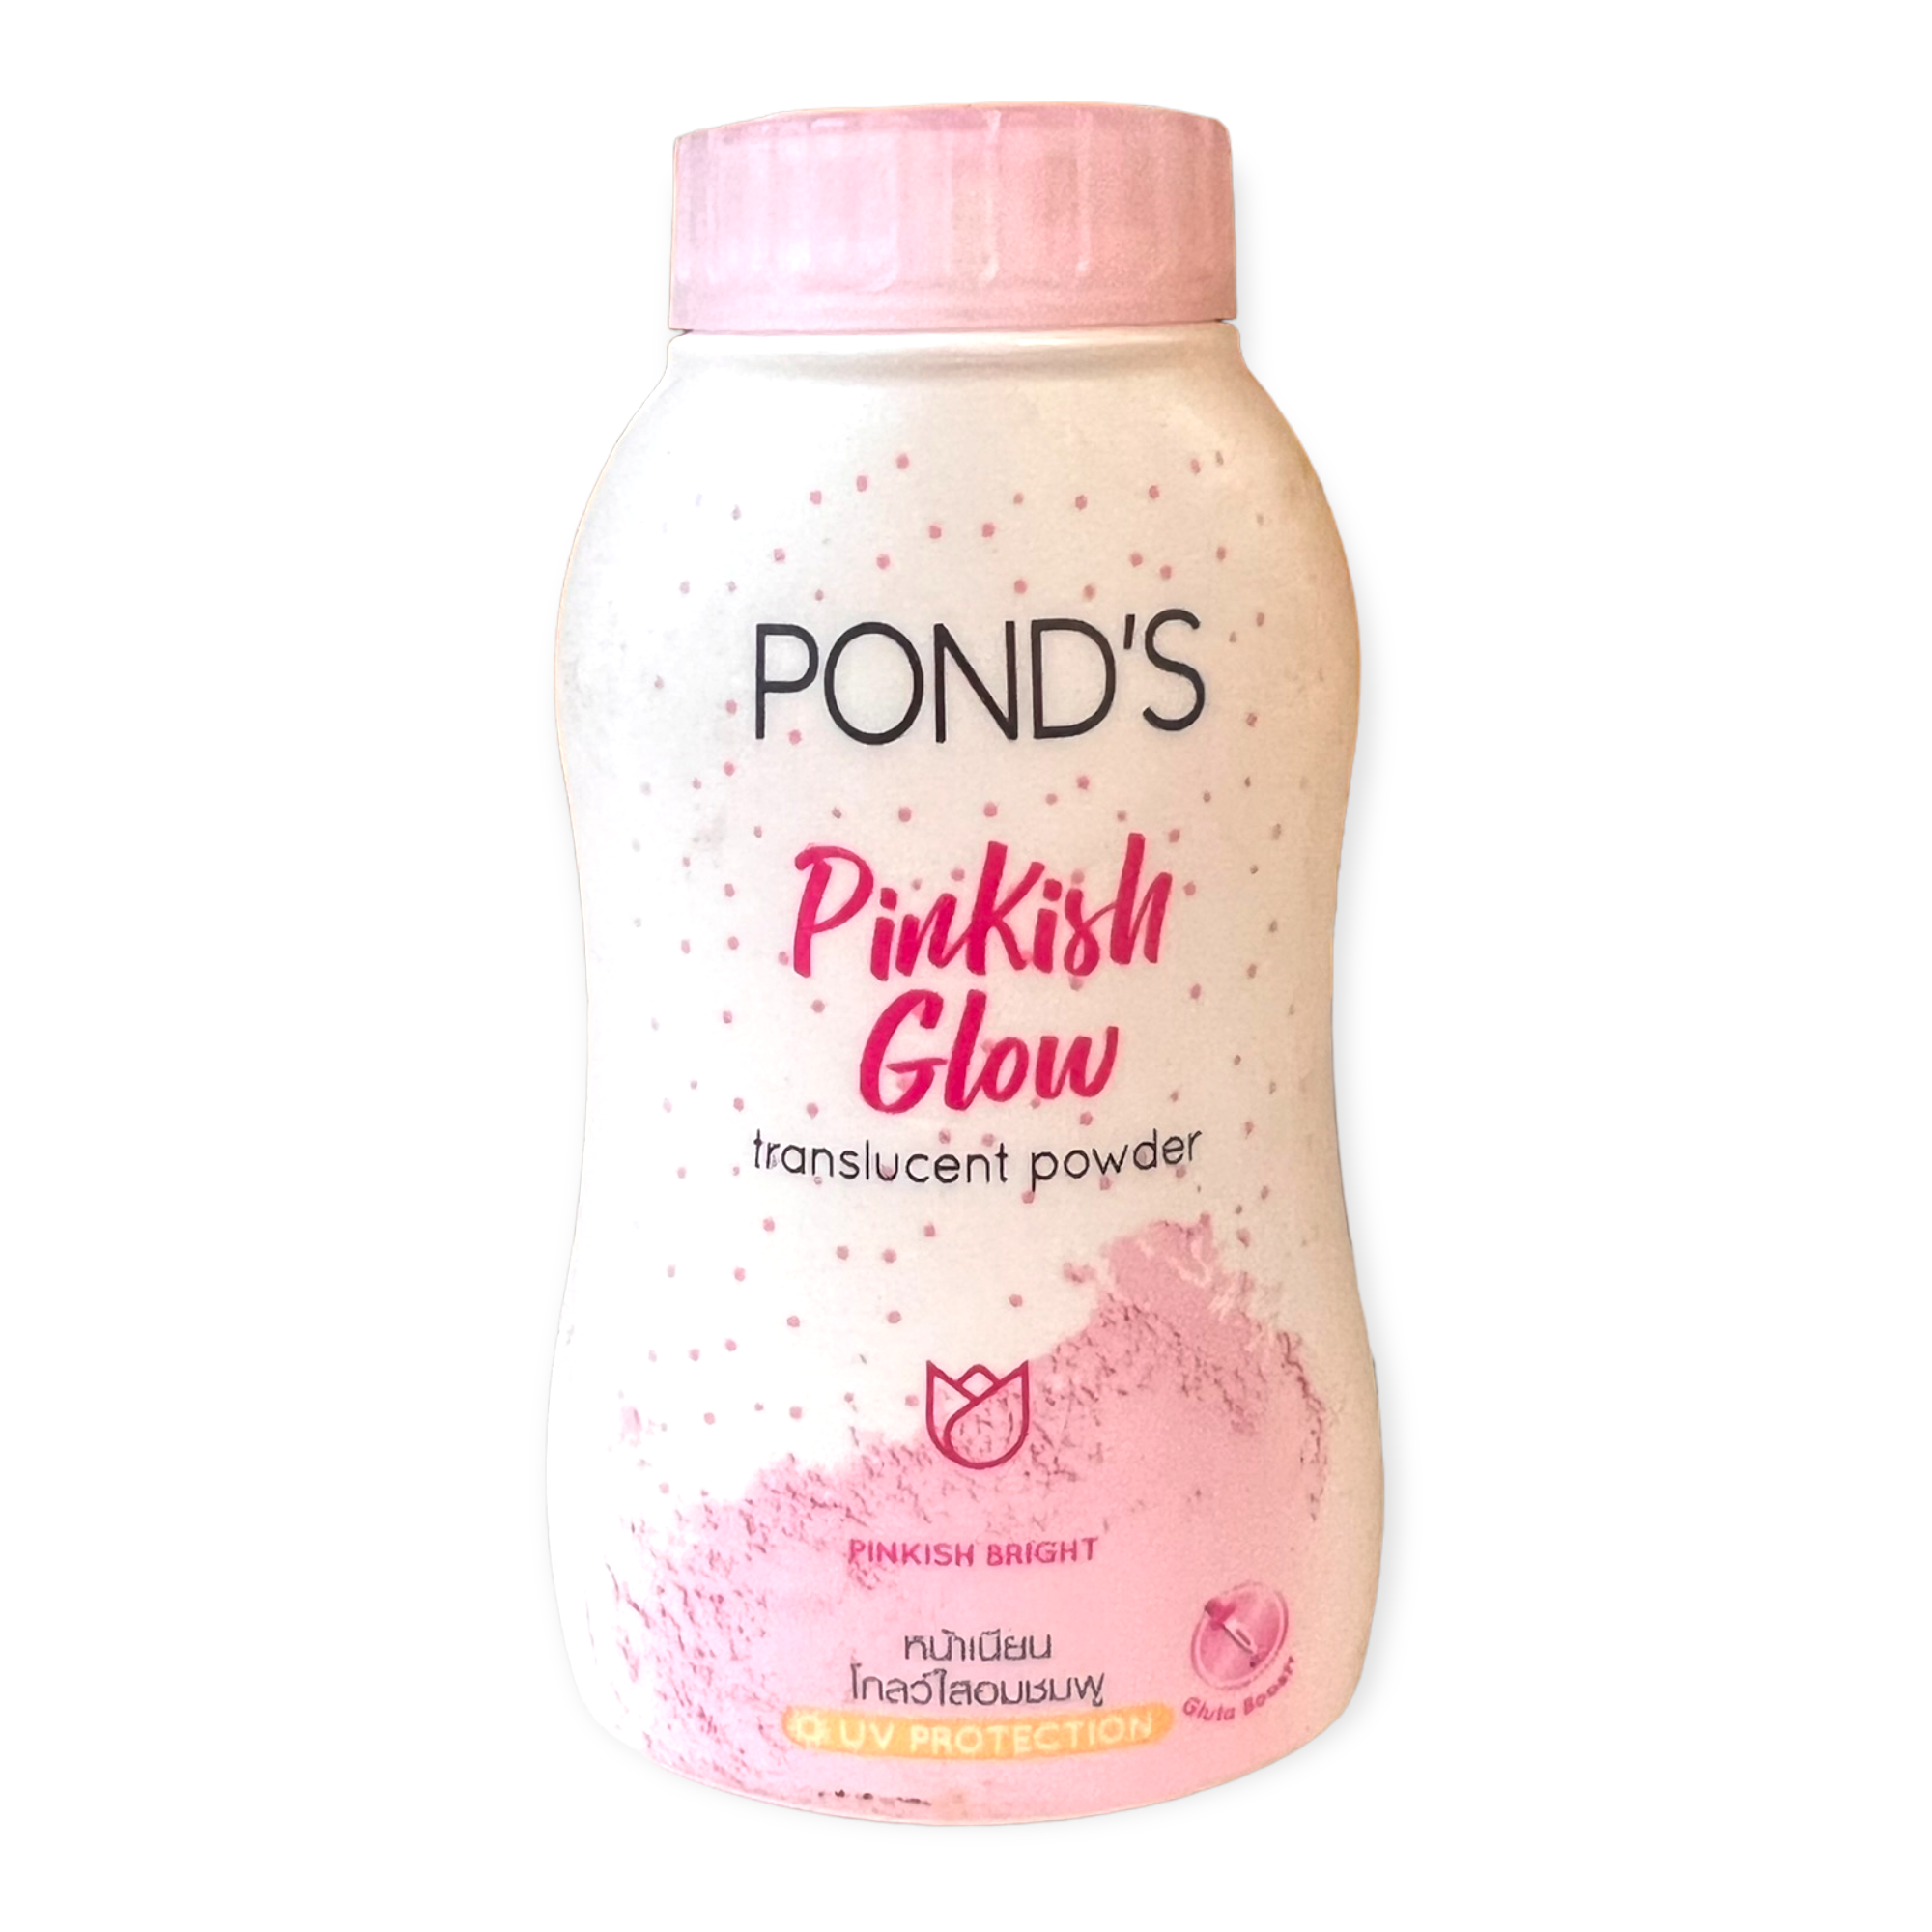 Pond’s Pinkish Glow Translucent Powder - Pinkish Bright 50g